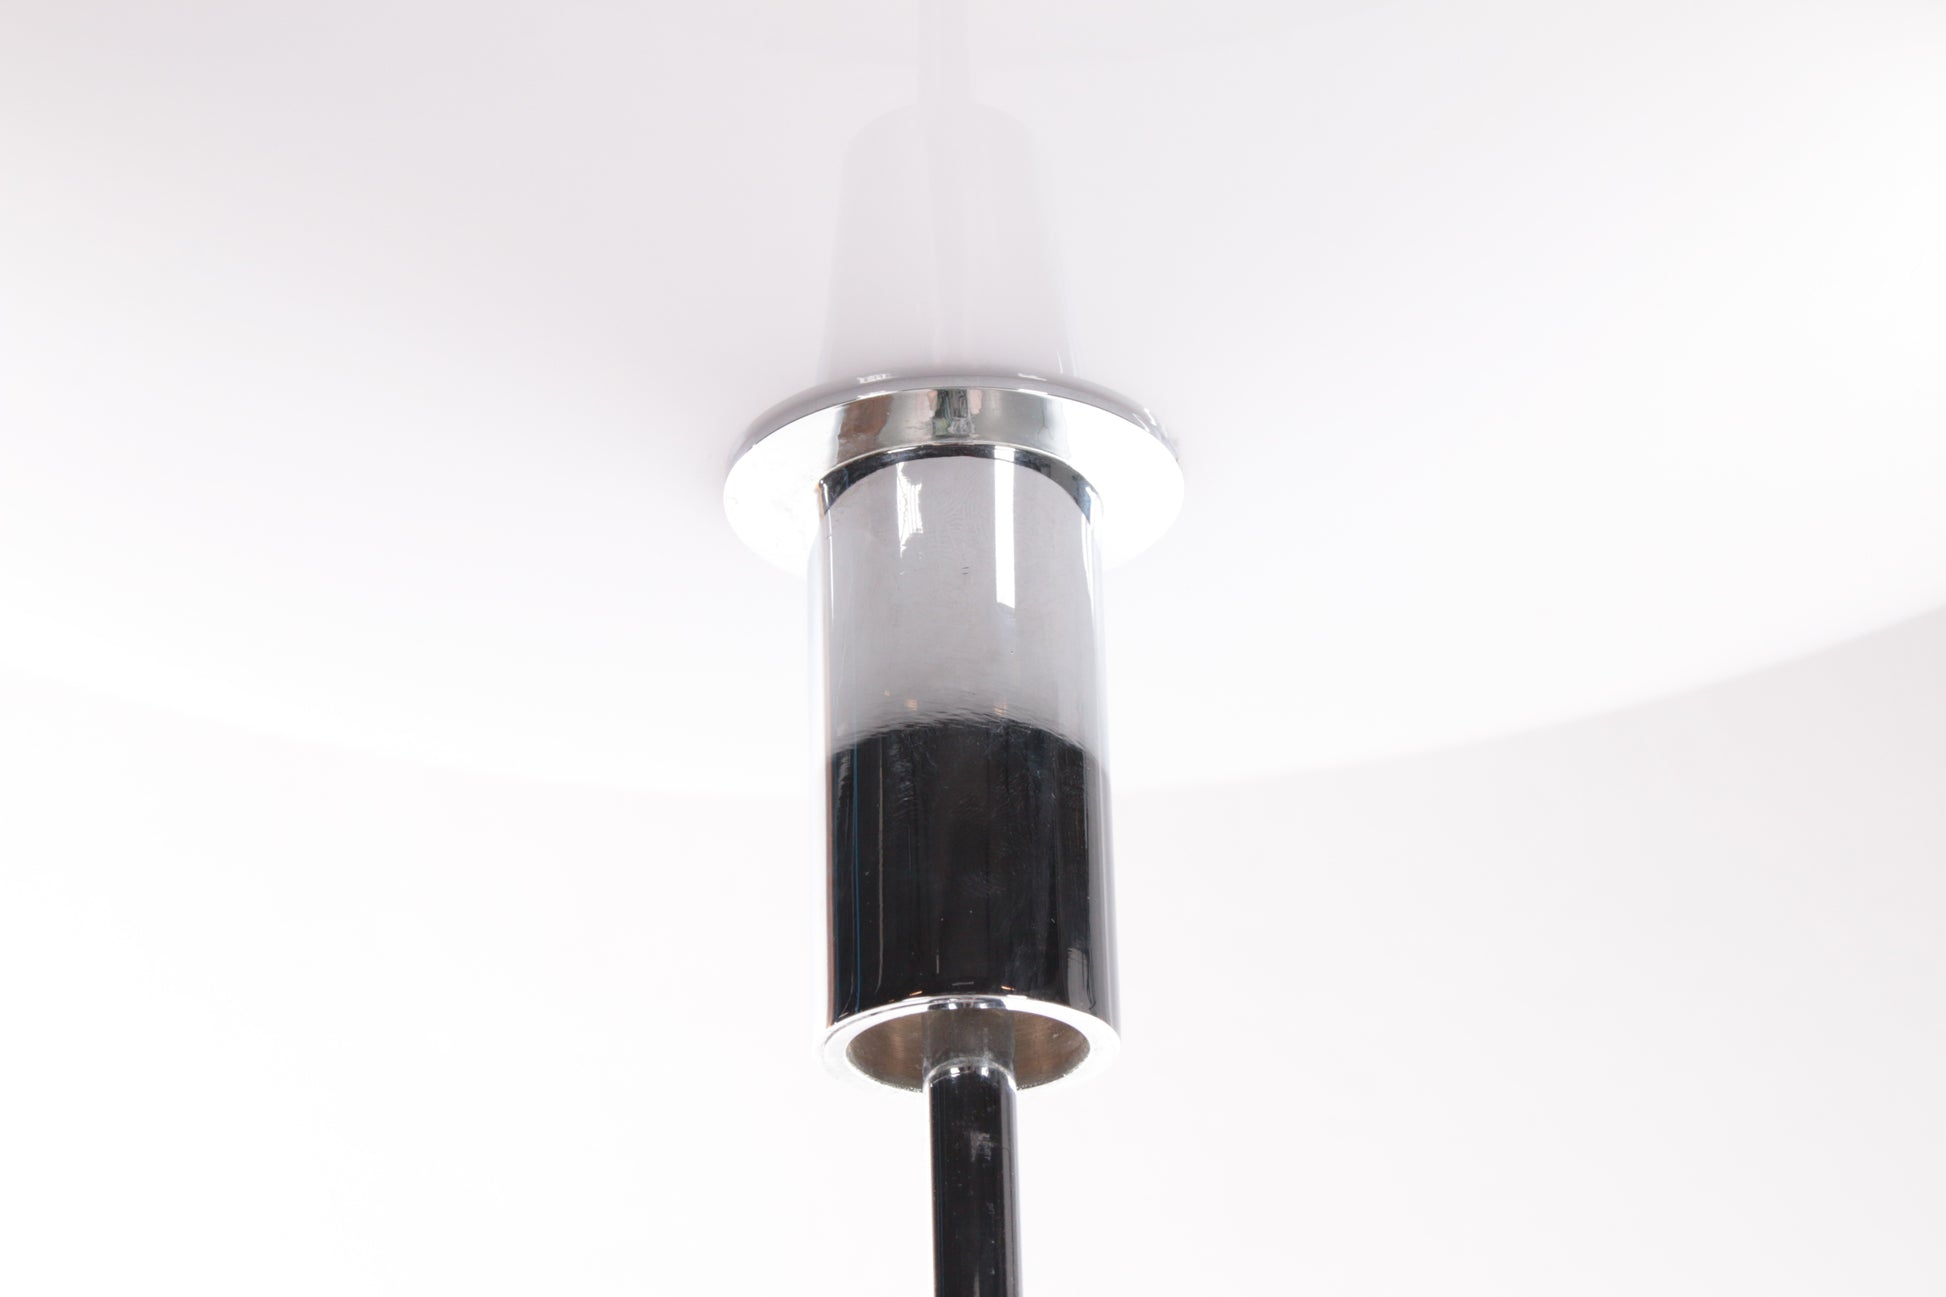 VeArt Vloerlamp Design by Jeannot Cerutti detail lomp onderaf